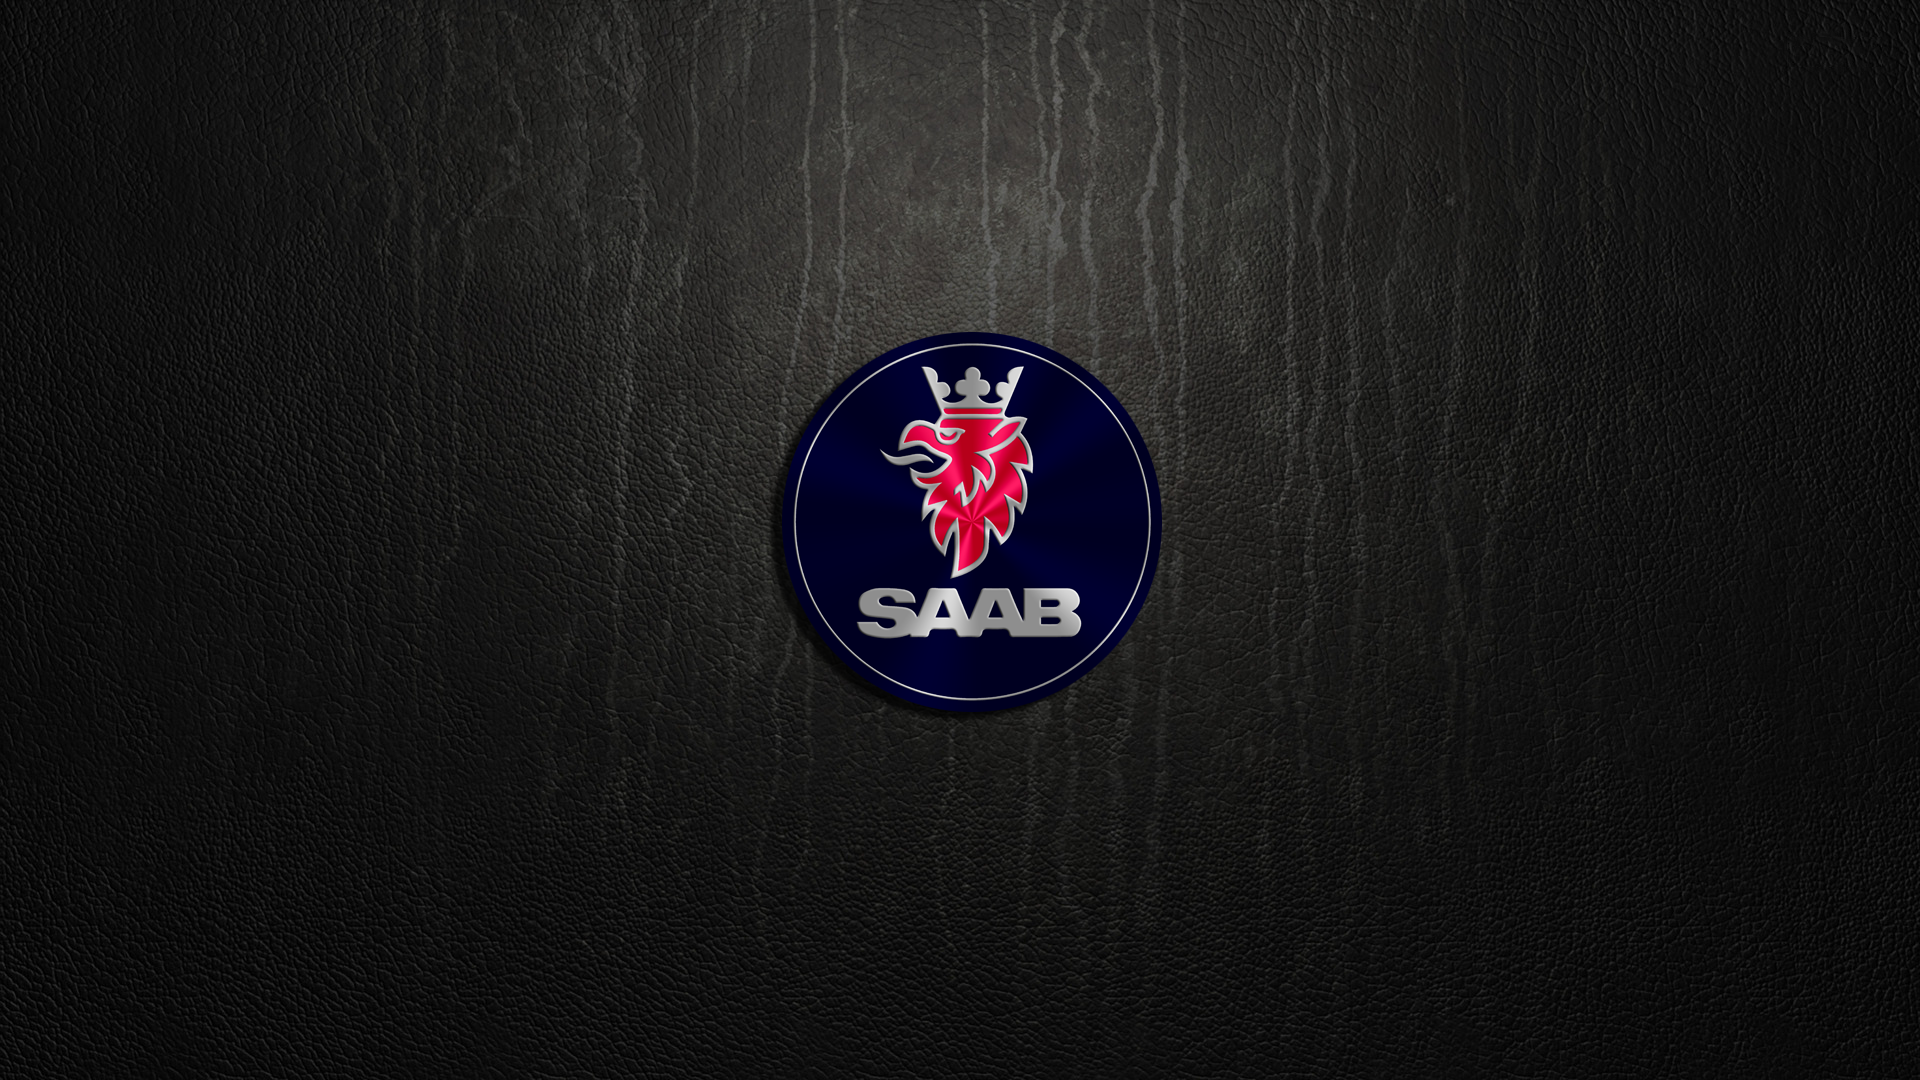 Saab HD Wallpaper Background Image